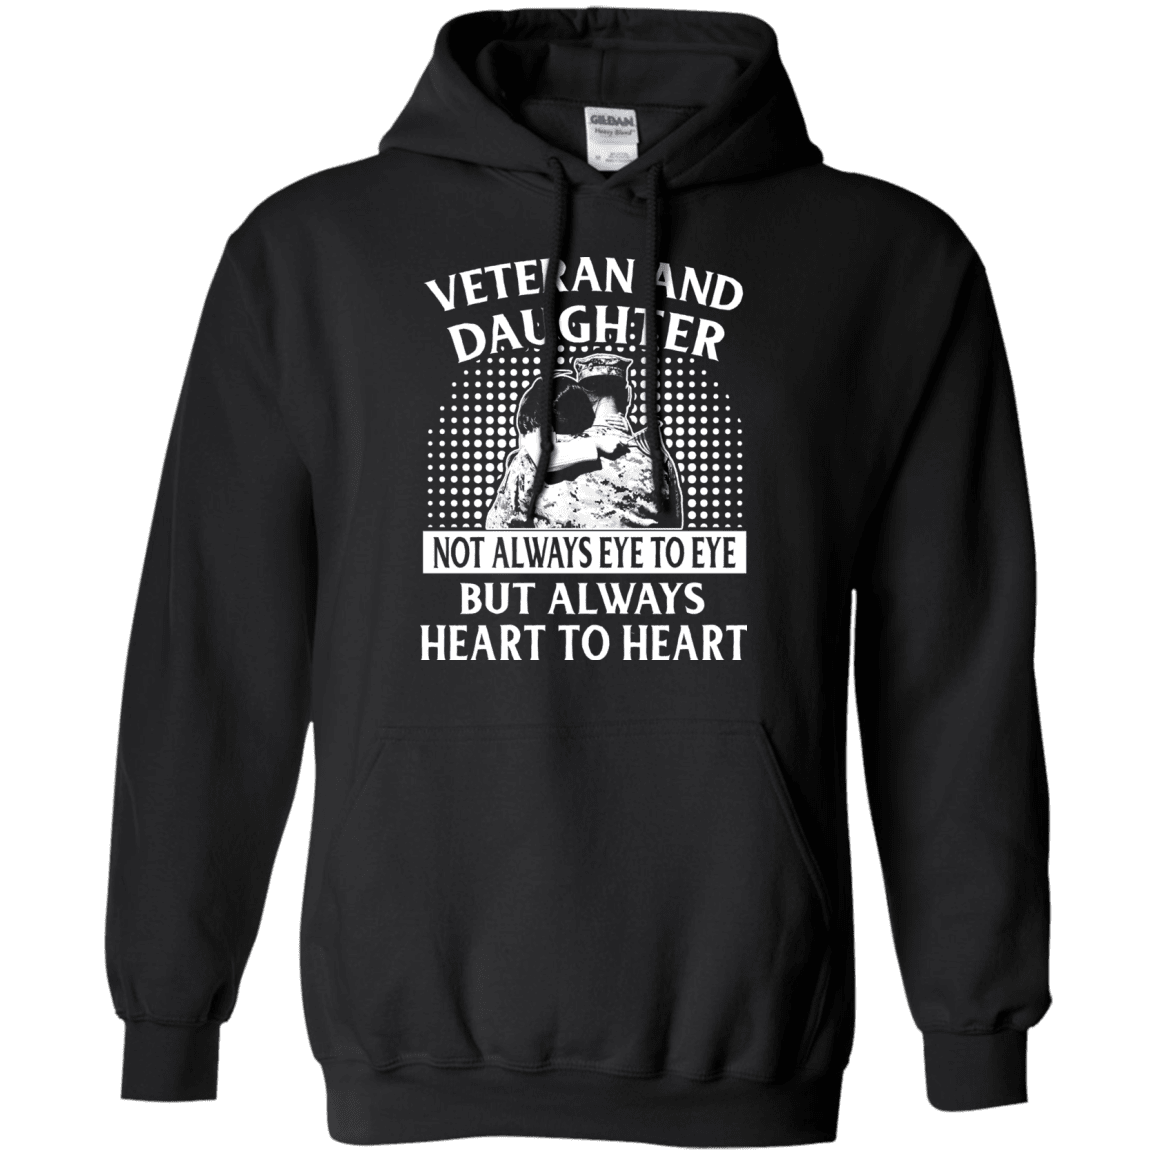 Military T-Shirt "VETERAN AND DAUGHTER ALWAYS HEART TO HEART"-TShirt-General-Veterans Nation